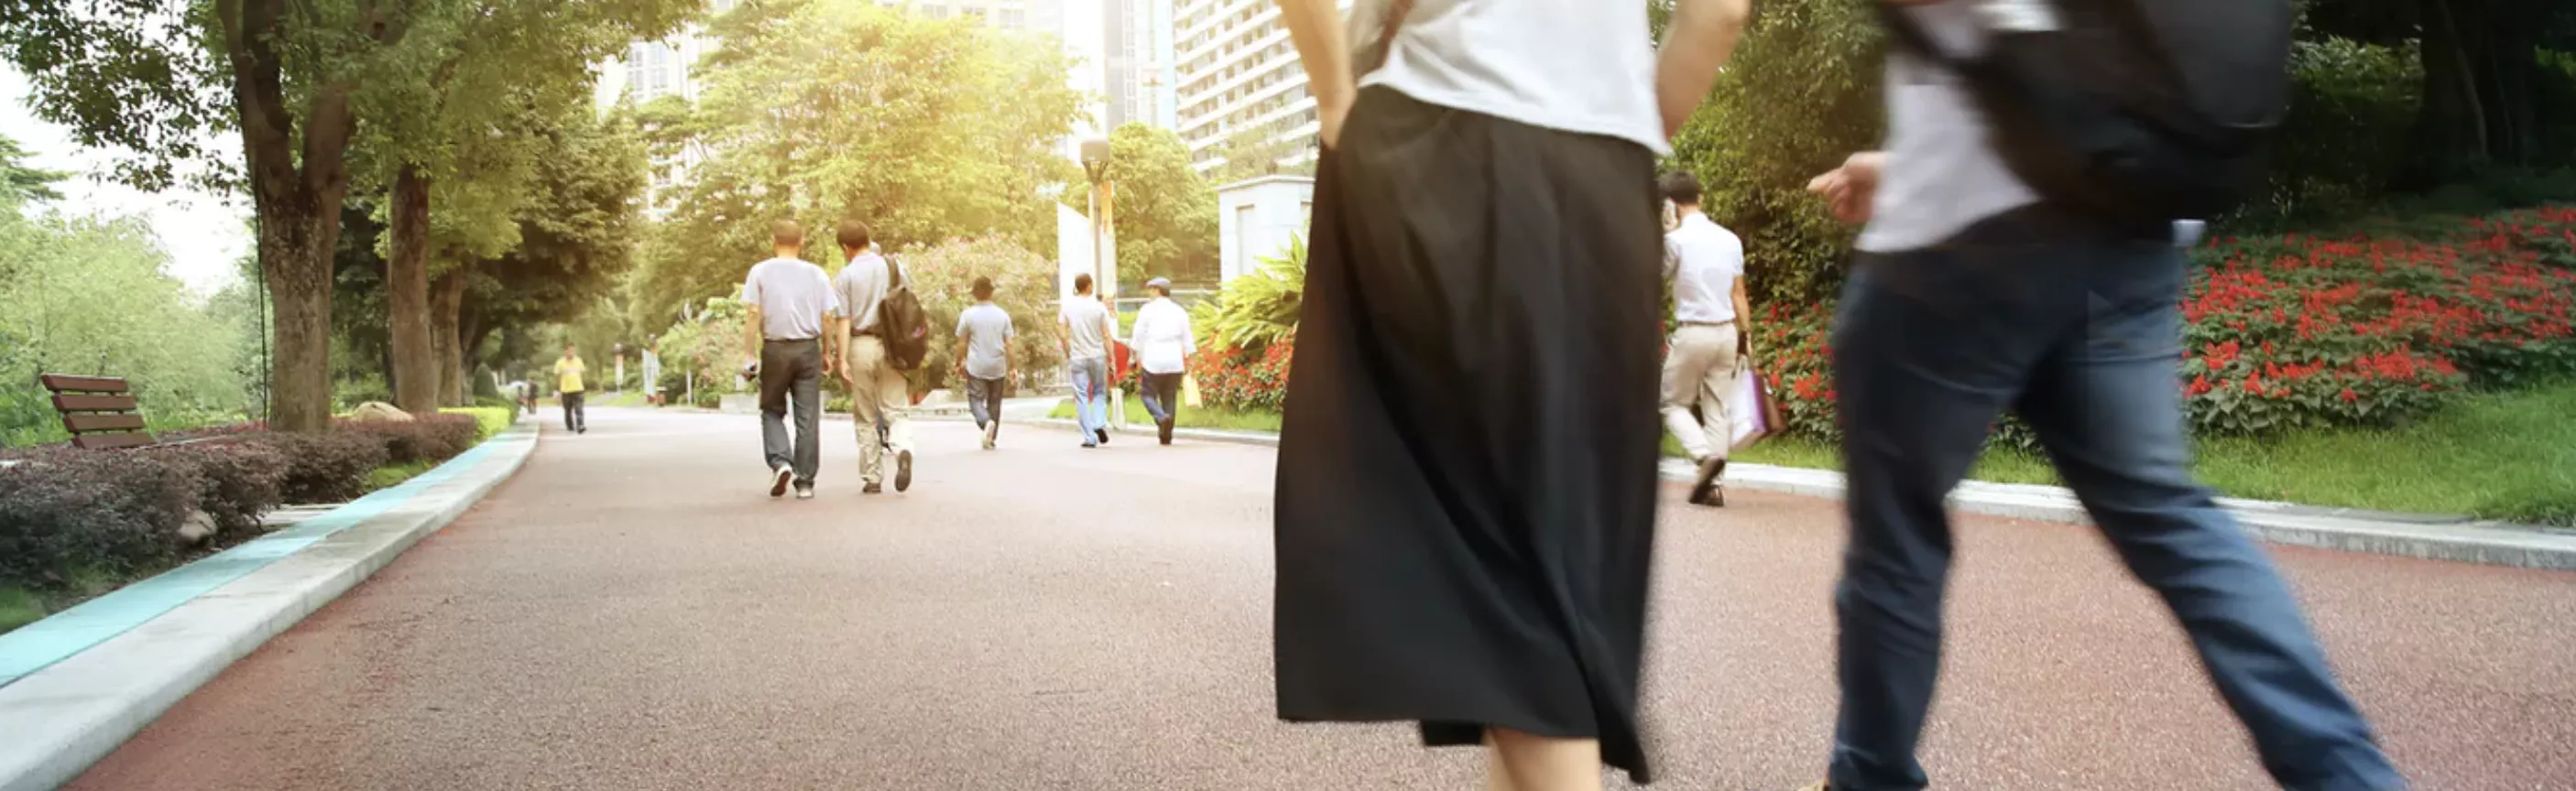 People walking on a path in China. sevenke/Shutterstock